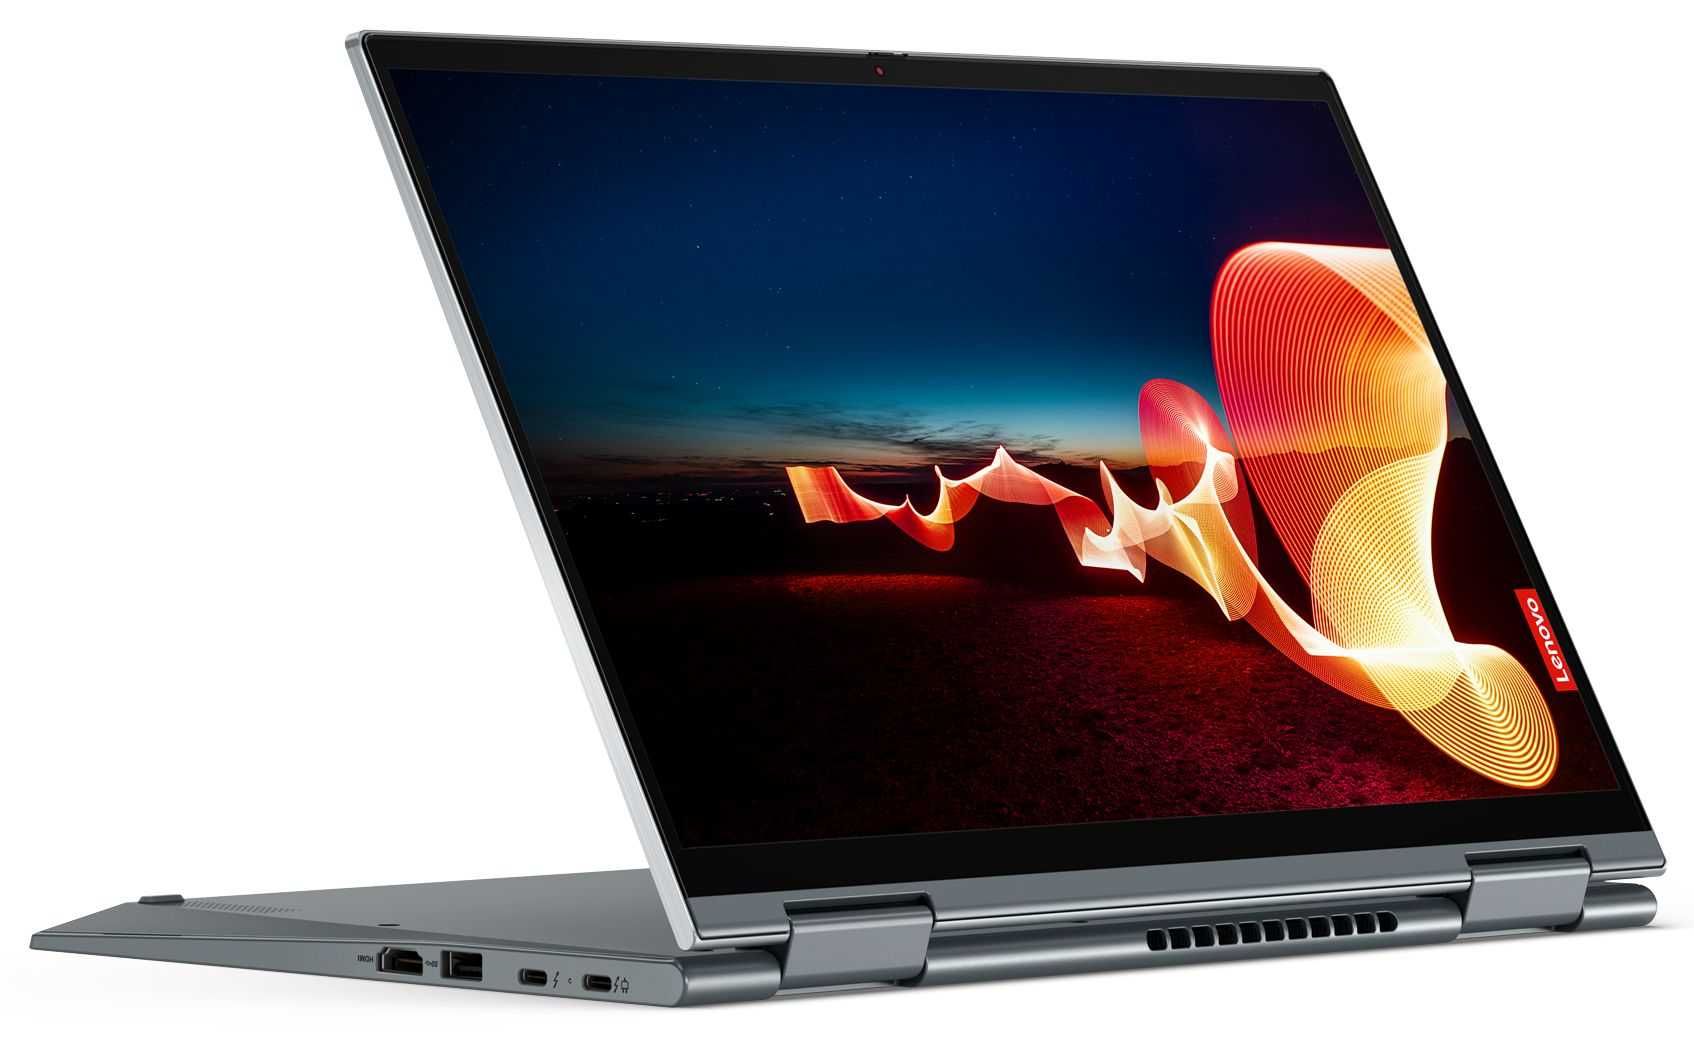 Promo Промоция! 14”тъч ThinkPad X1 Yoga/ i5 /16GB/ Win11Pro /4G LTE